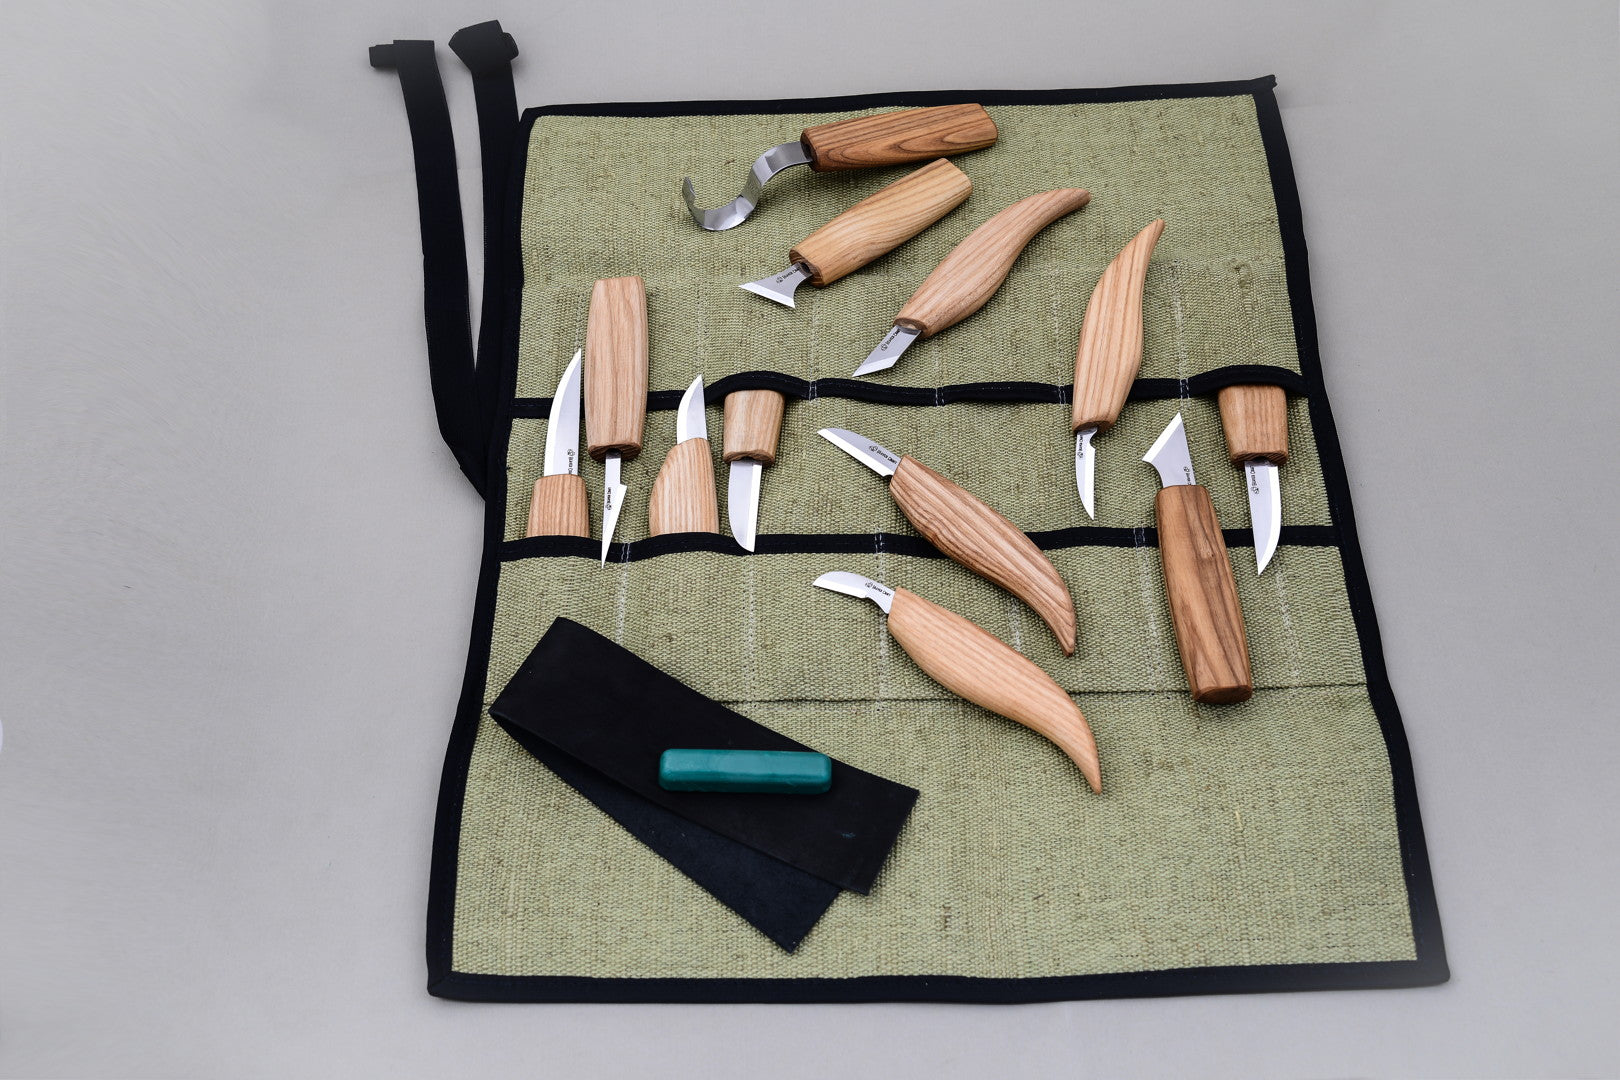 Geometric Wood Carving Knives Set with Case – BeaverCraft Tools